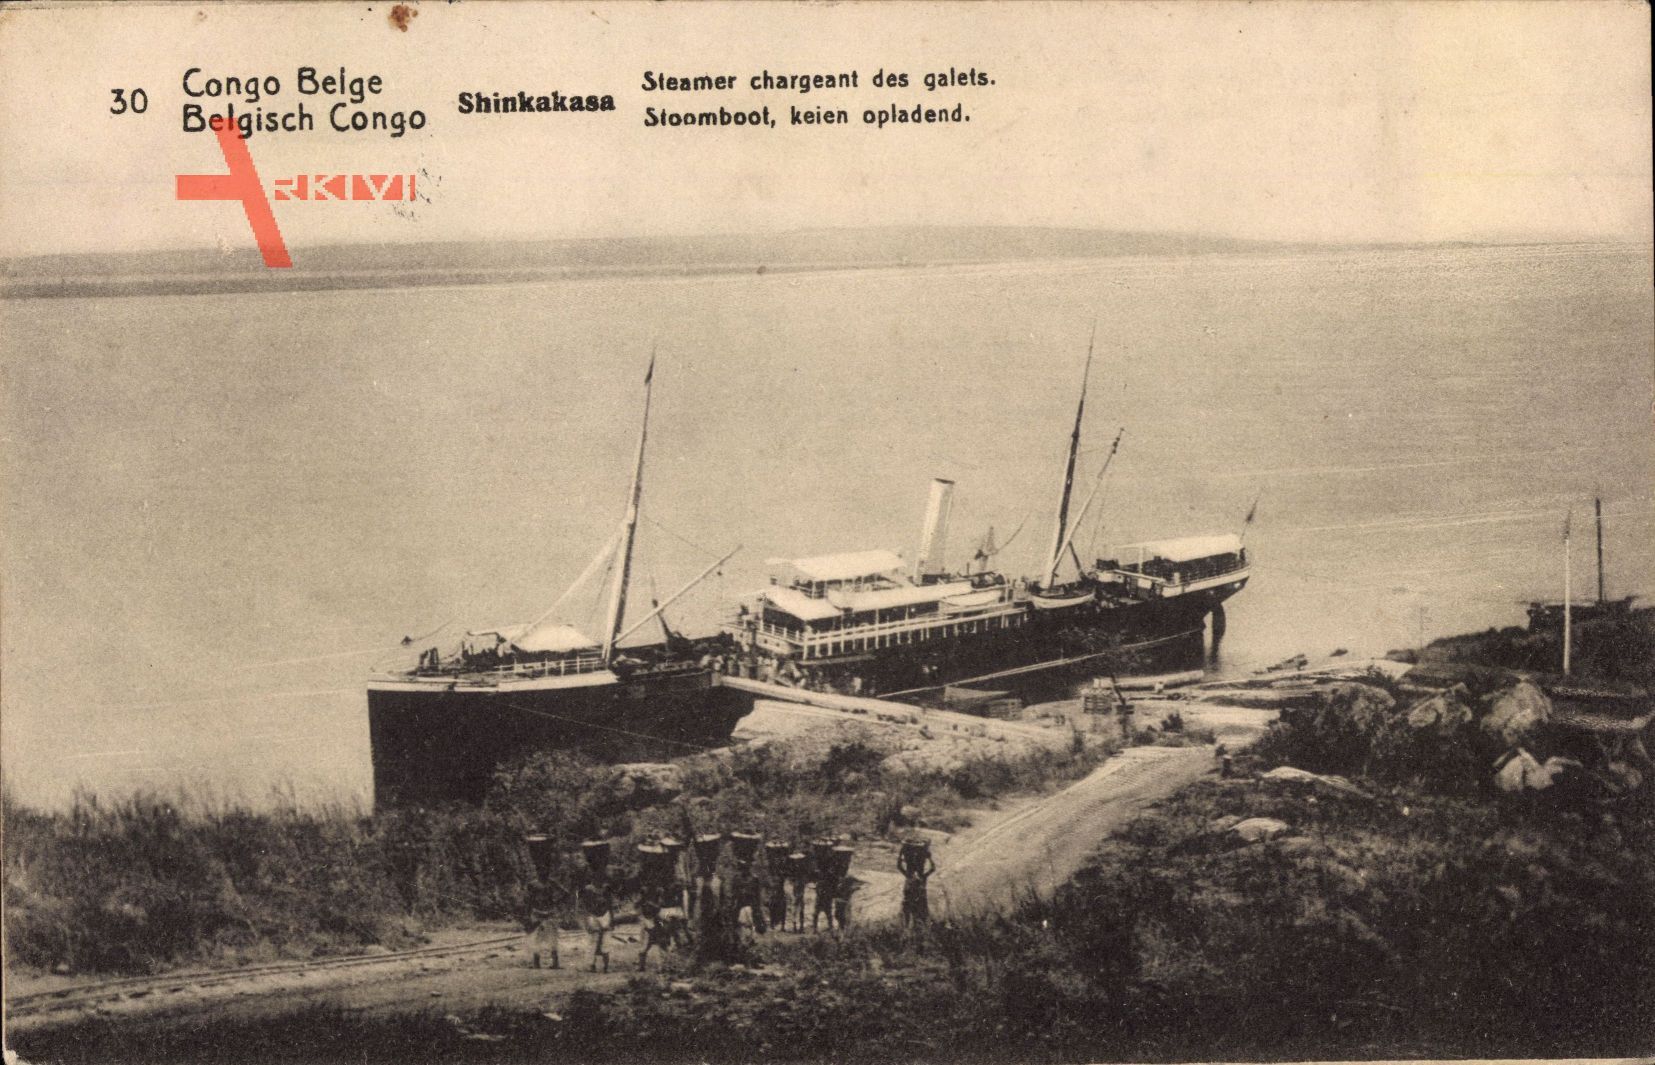 Shinkakasa Demokratische Republik Kongo Zaire, Dampfschiff